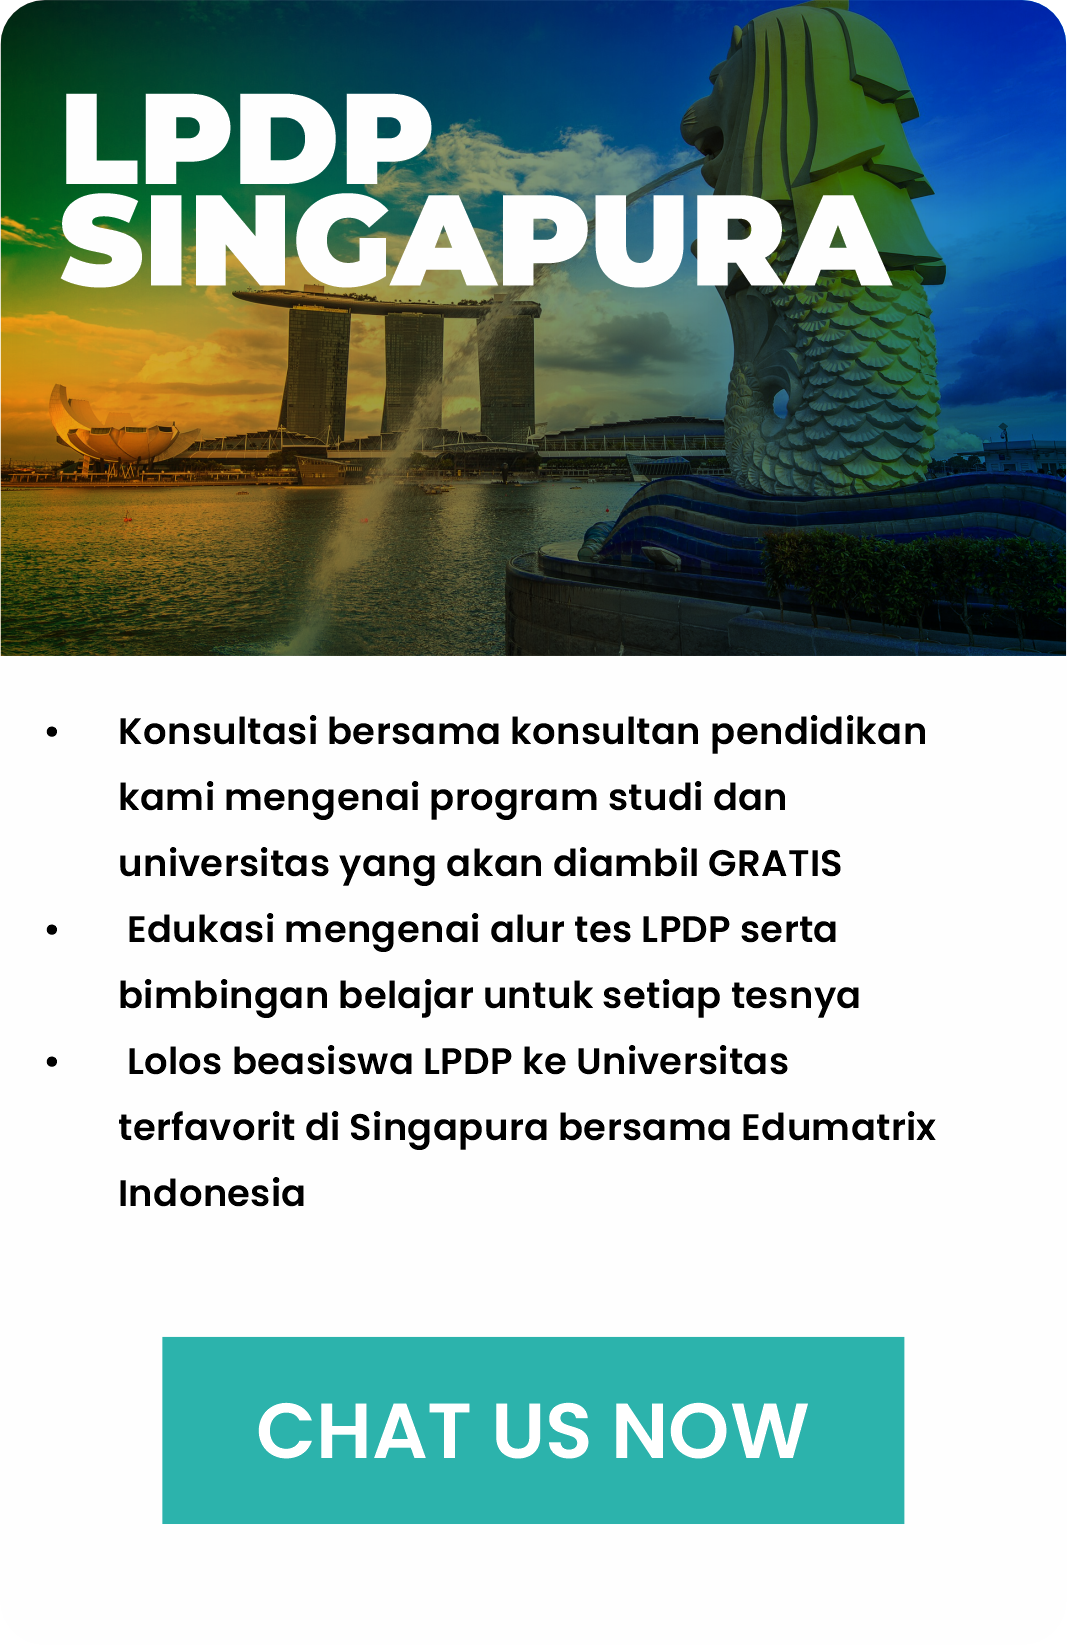 LPDP_Singapura (1)